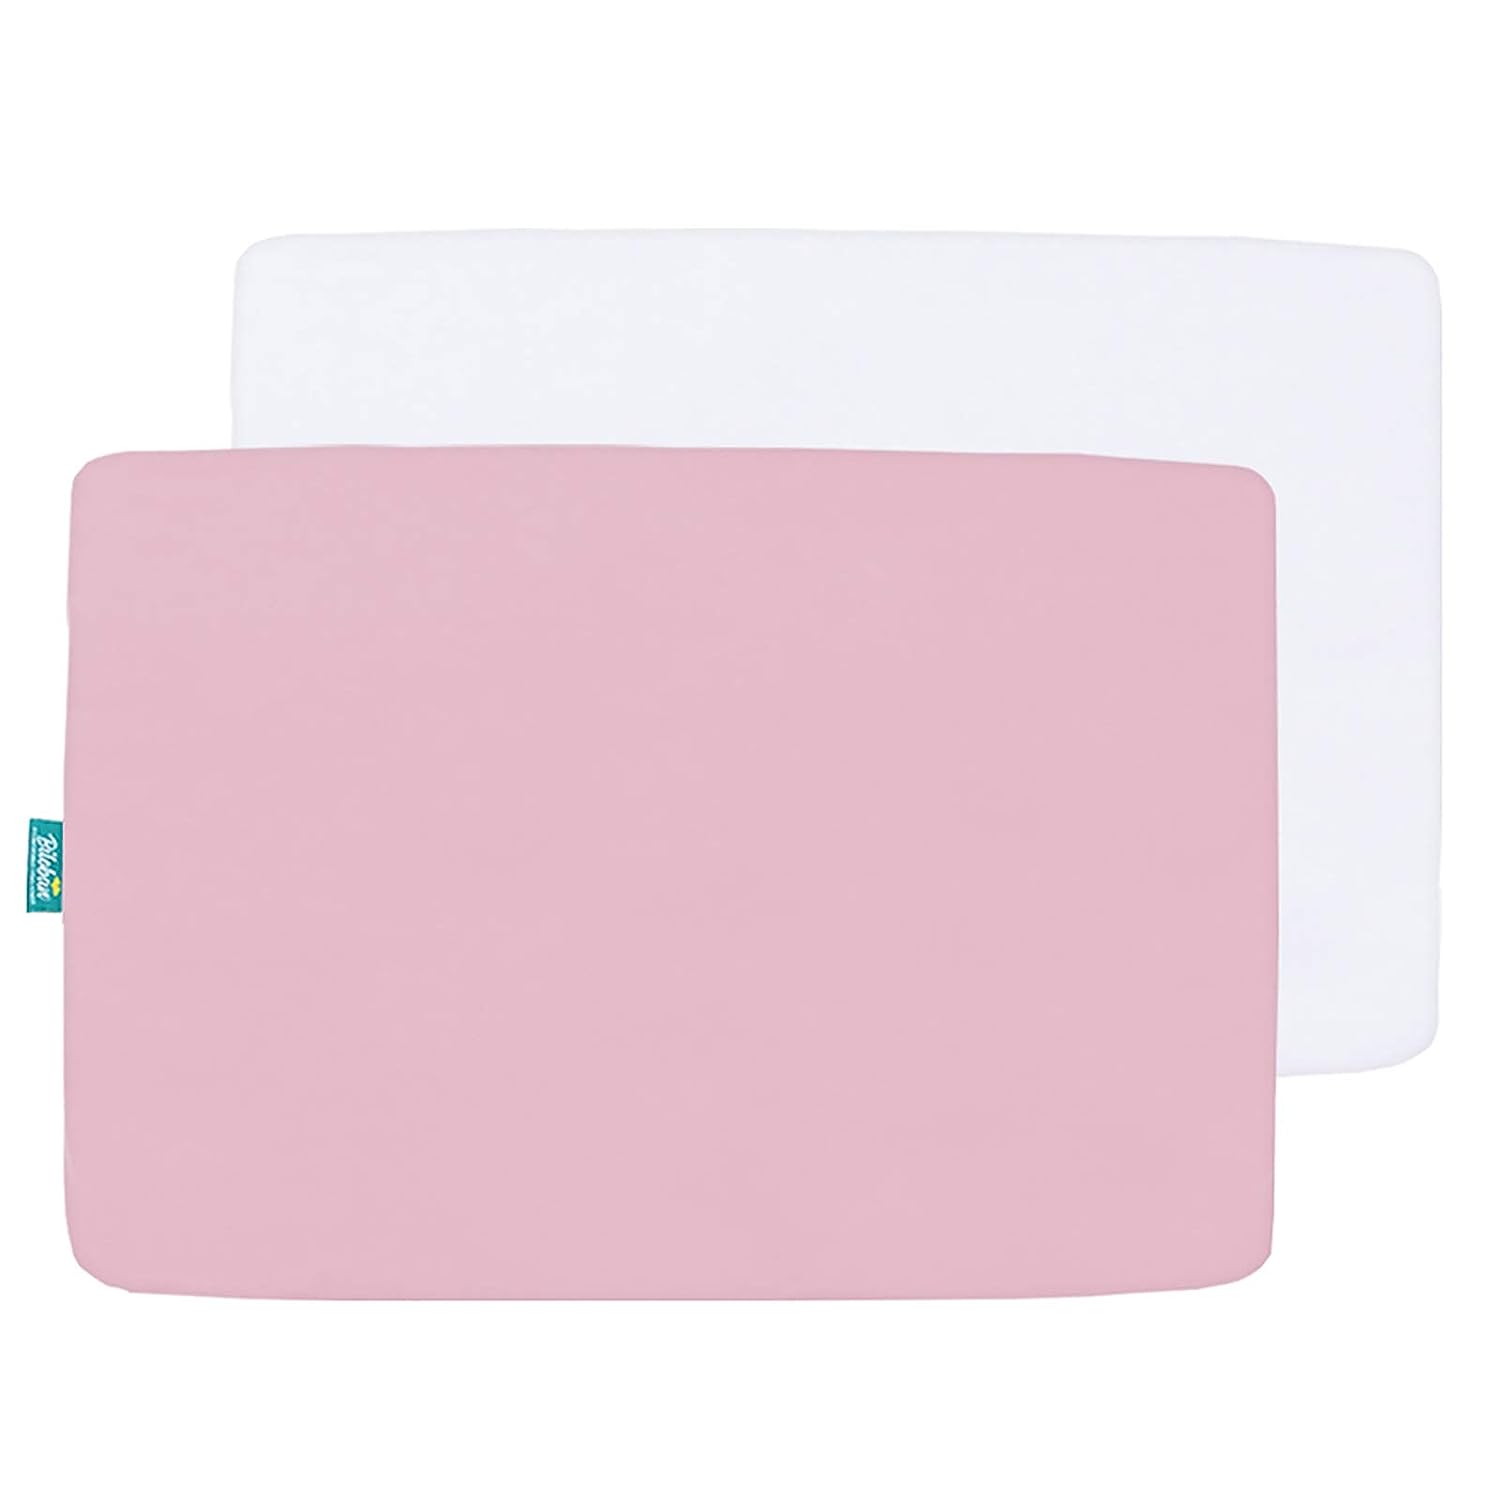 Pack n Play Sheet | Mini Crib Sheet - 2 Pack, Ultra Soft Microfiber, Fits Graco Pack and Play, Pink & White, Preshrunk - Biloban Online Store